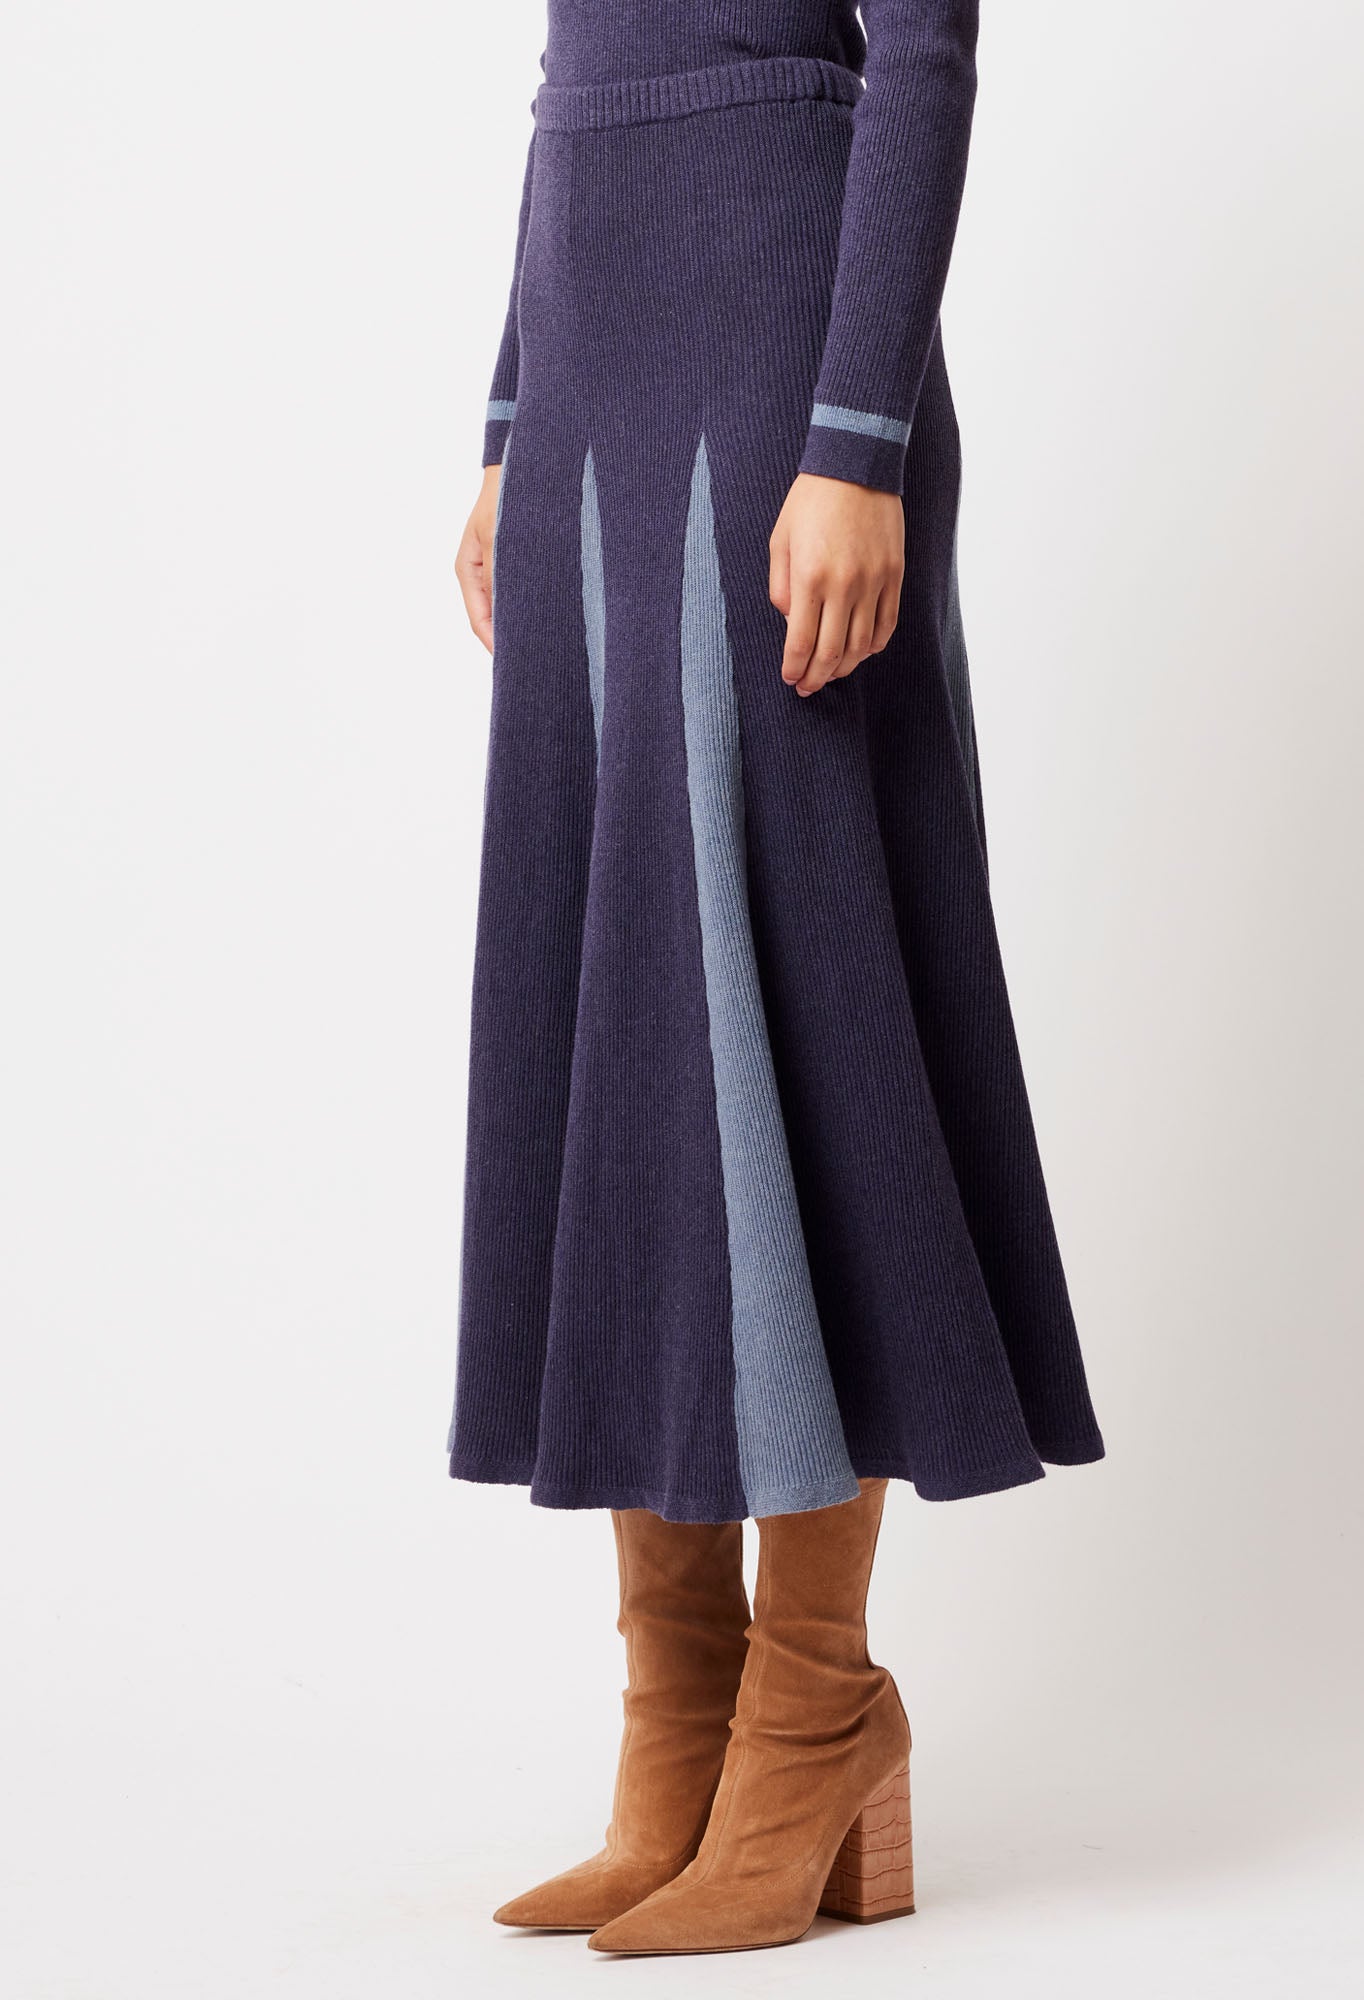 OnceWas Nova Merino Wool Knit Skirt in Ink/Storm